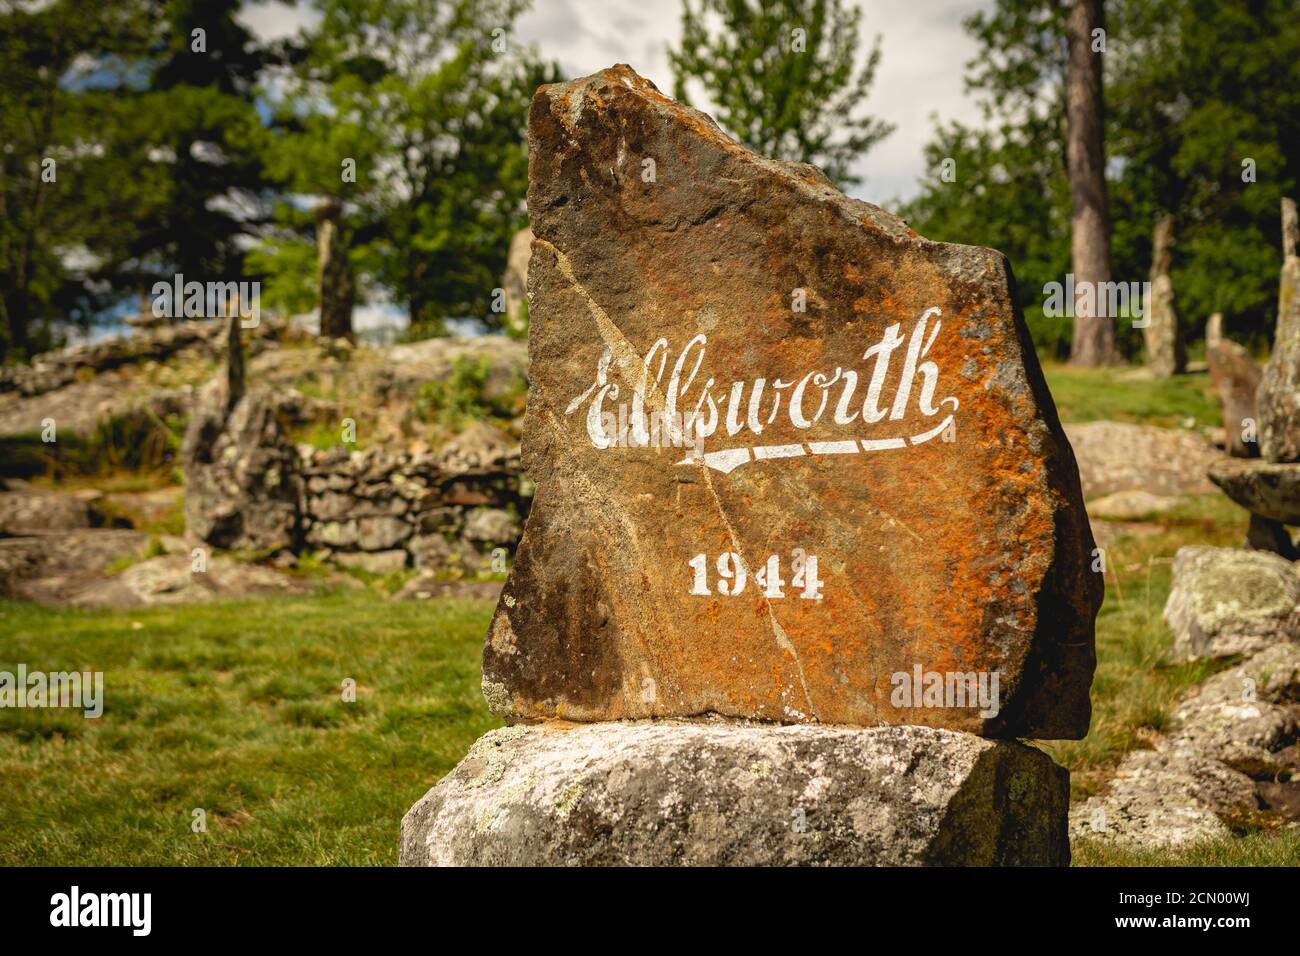 Stone sculptures in the Ellsworth Rock Gardens in Voyageurs National Park, Minnesota Stock Photo